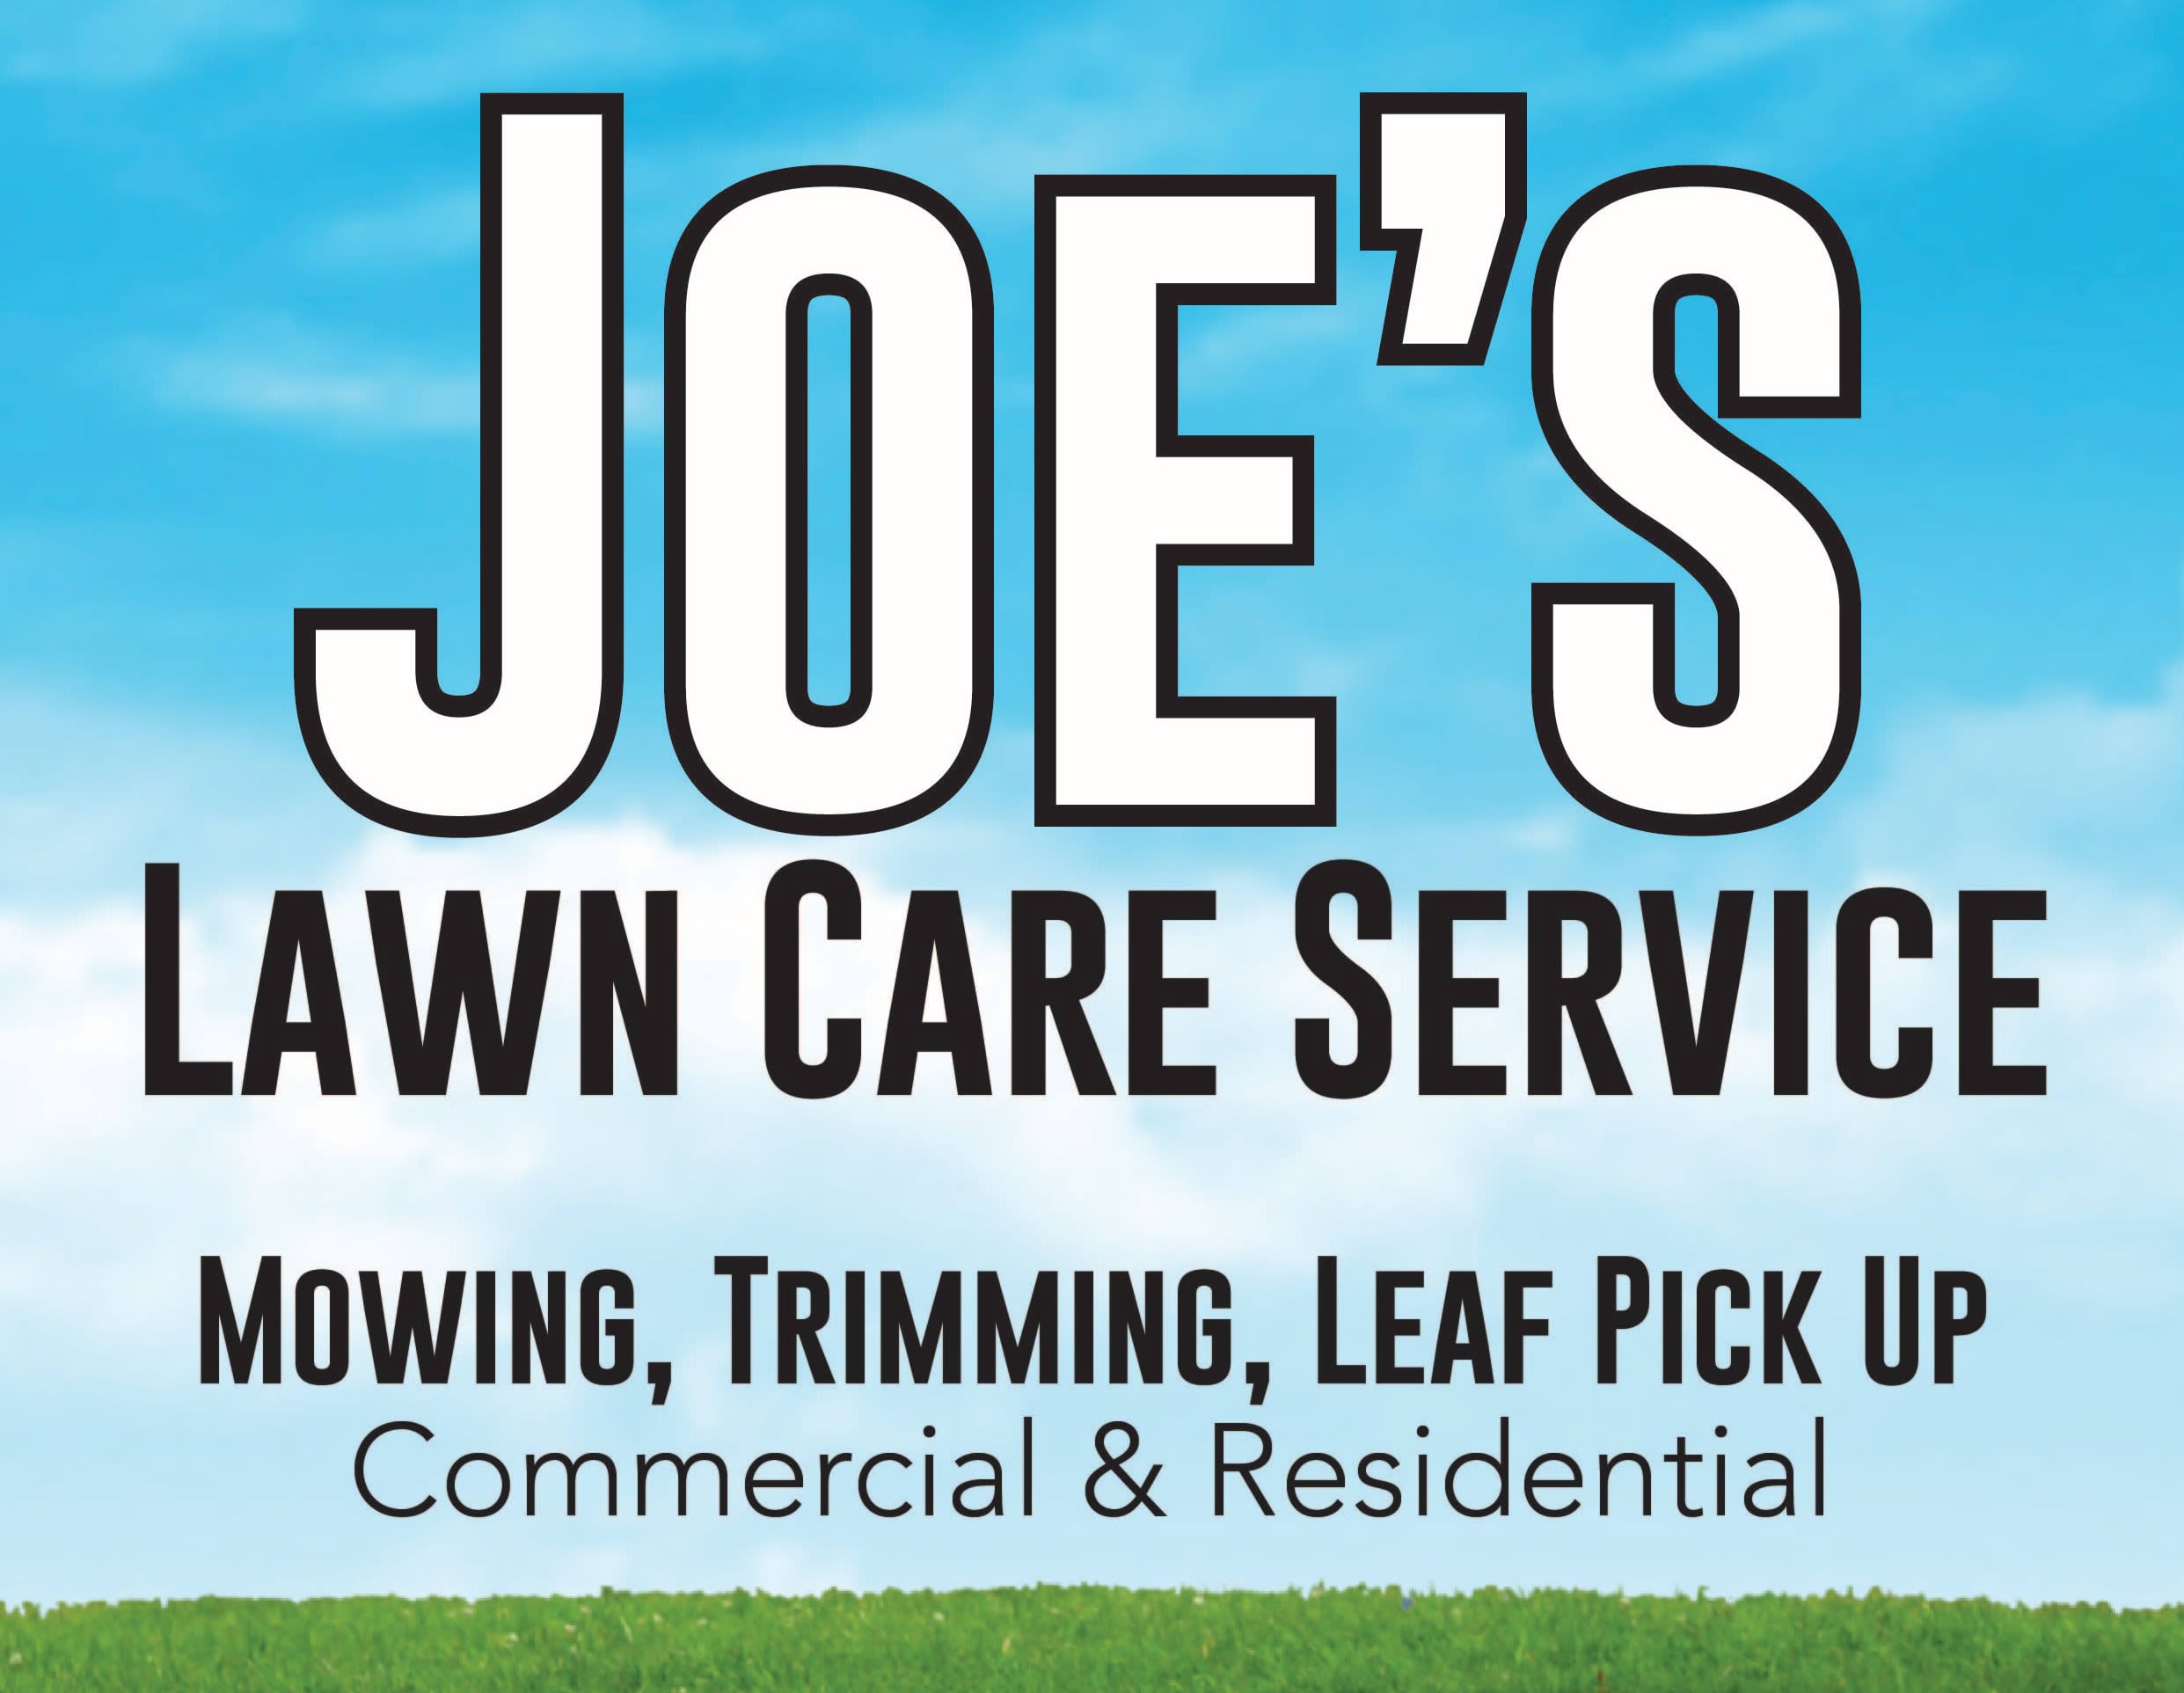 Joe's Lawn Care Service